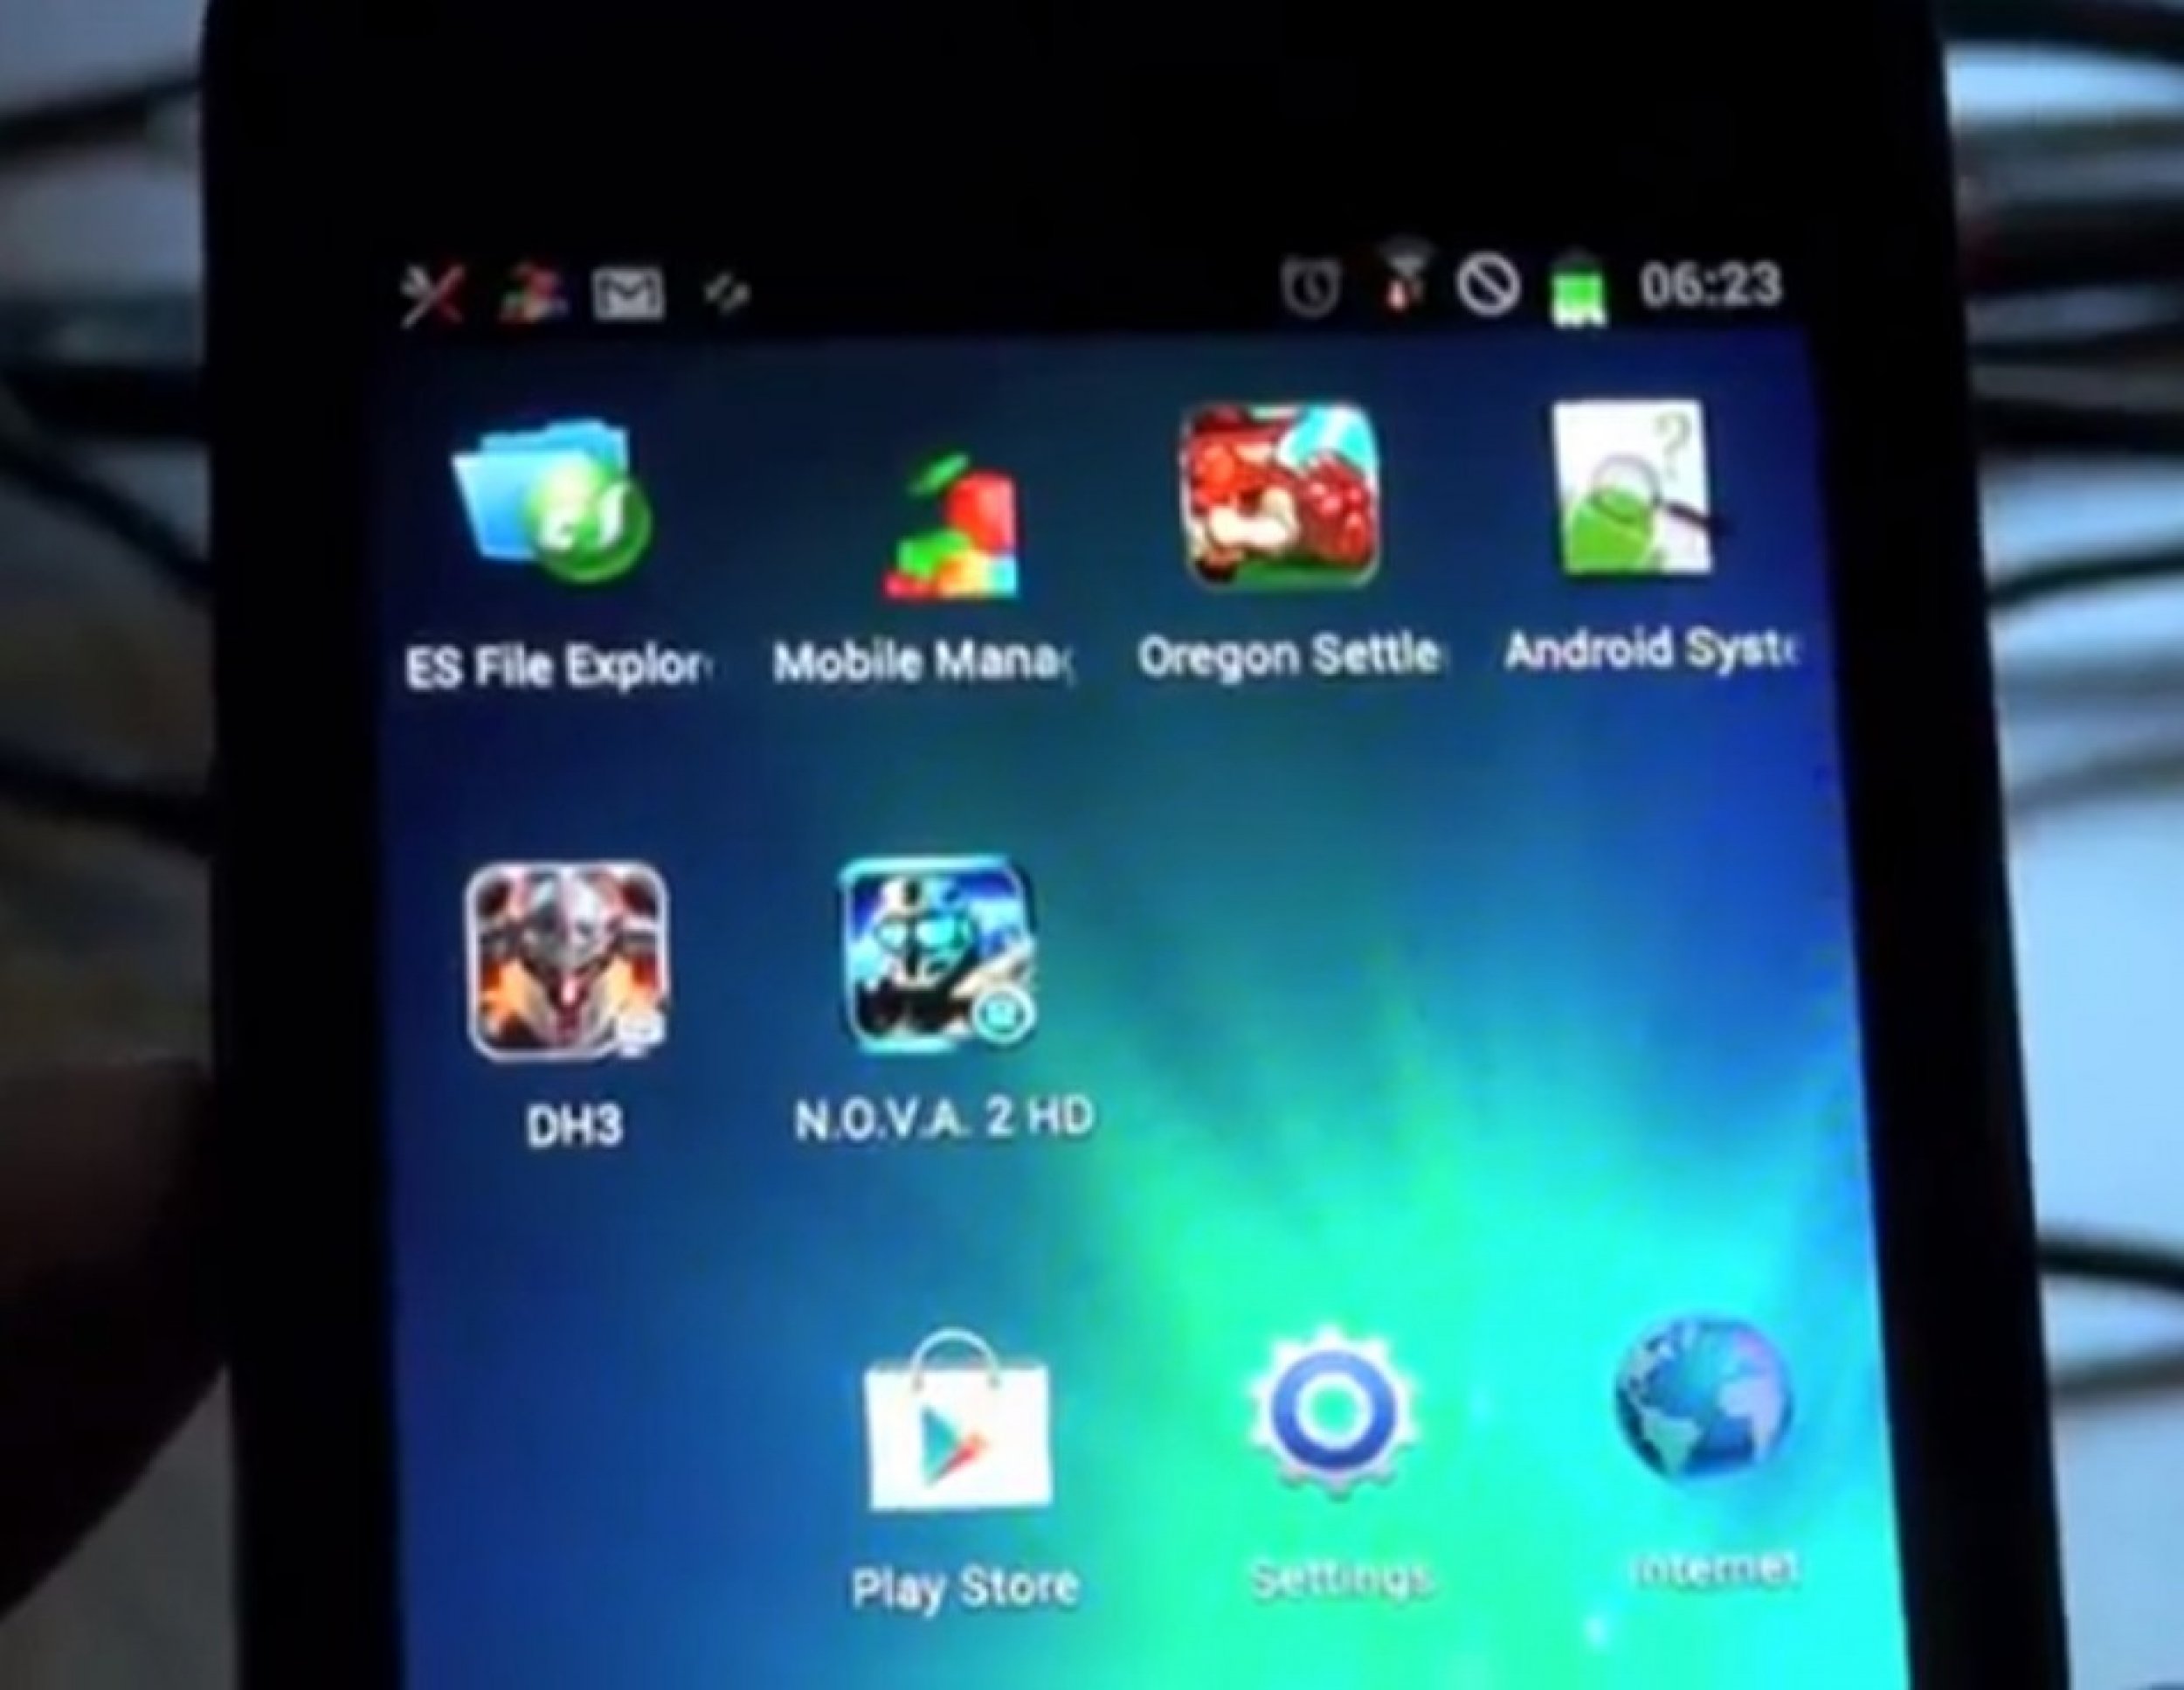 Samsung Galaxy S3 - Top of Screen